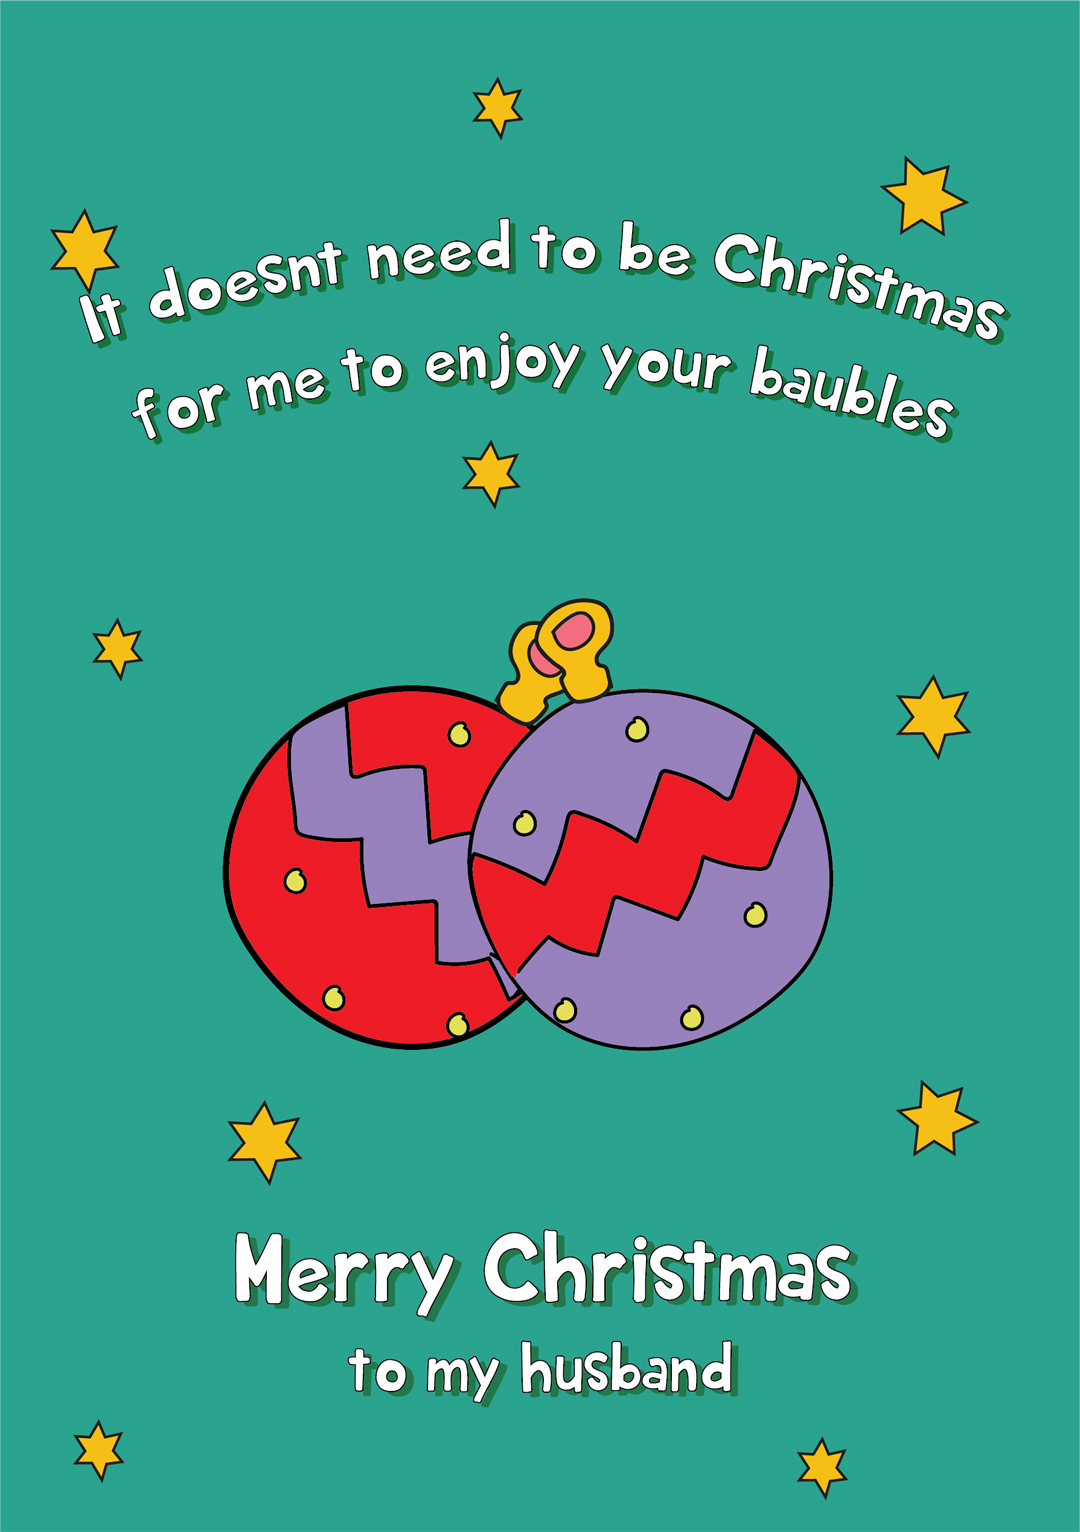 Enjoy Your Baubles Christmas Card